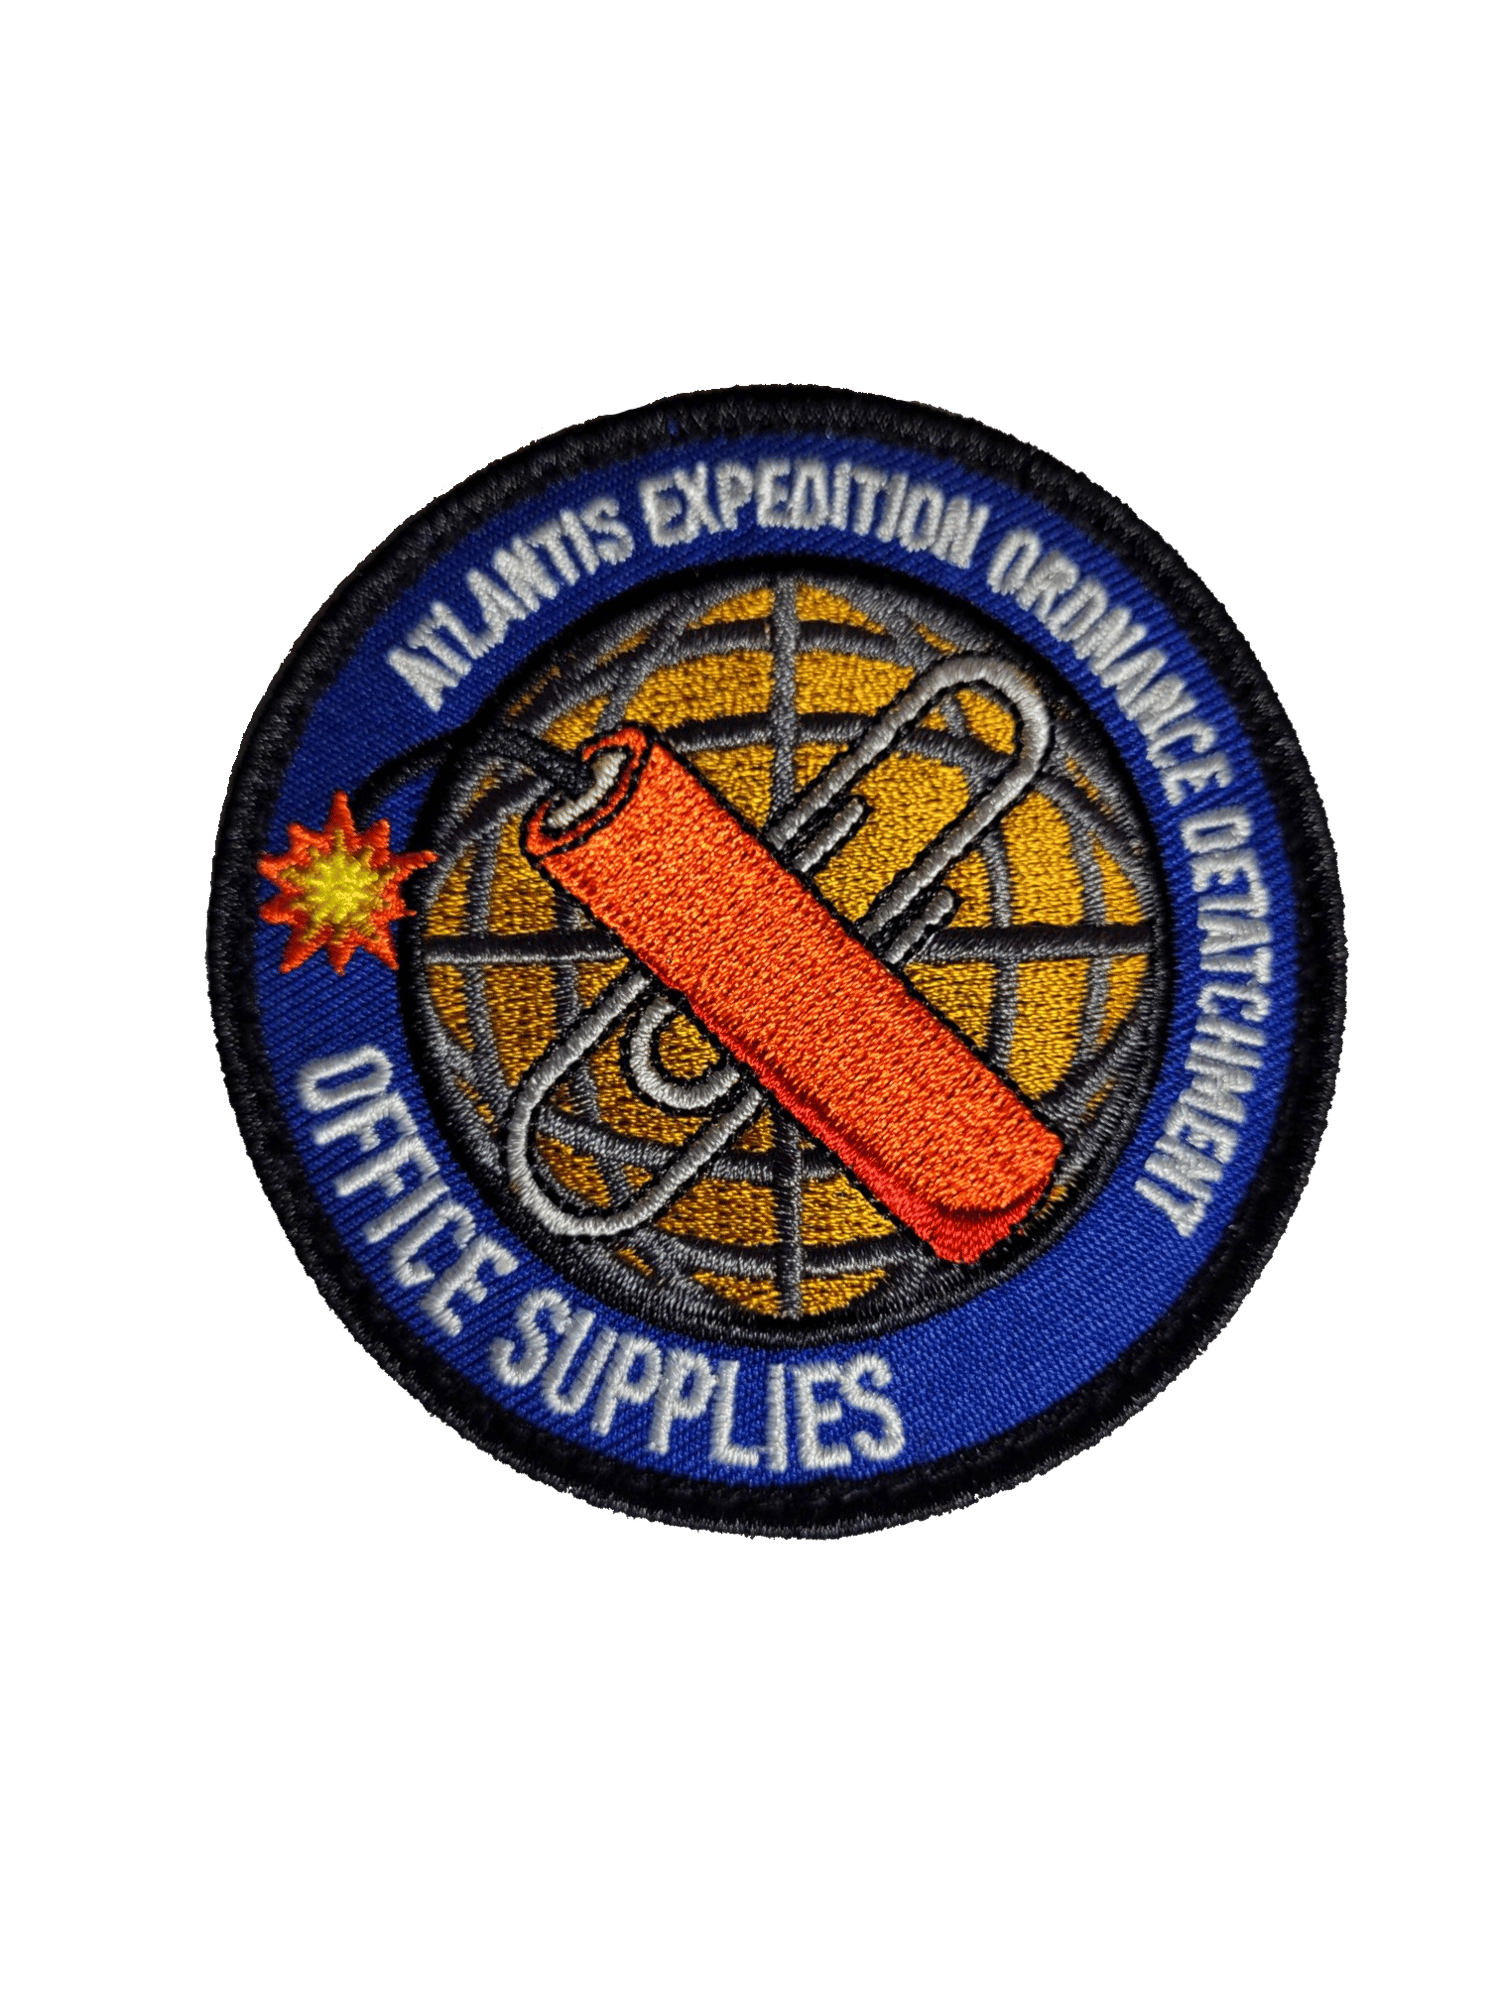 Image of Atlantis Expedition Ordinance Detachment